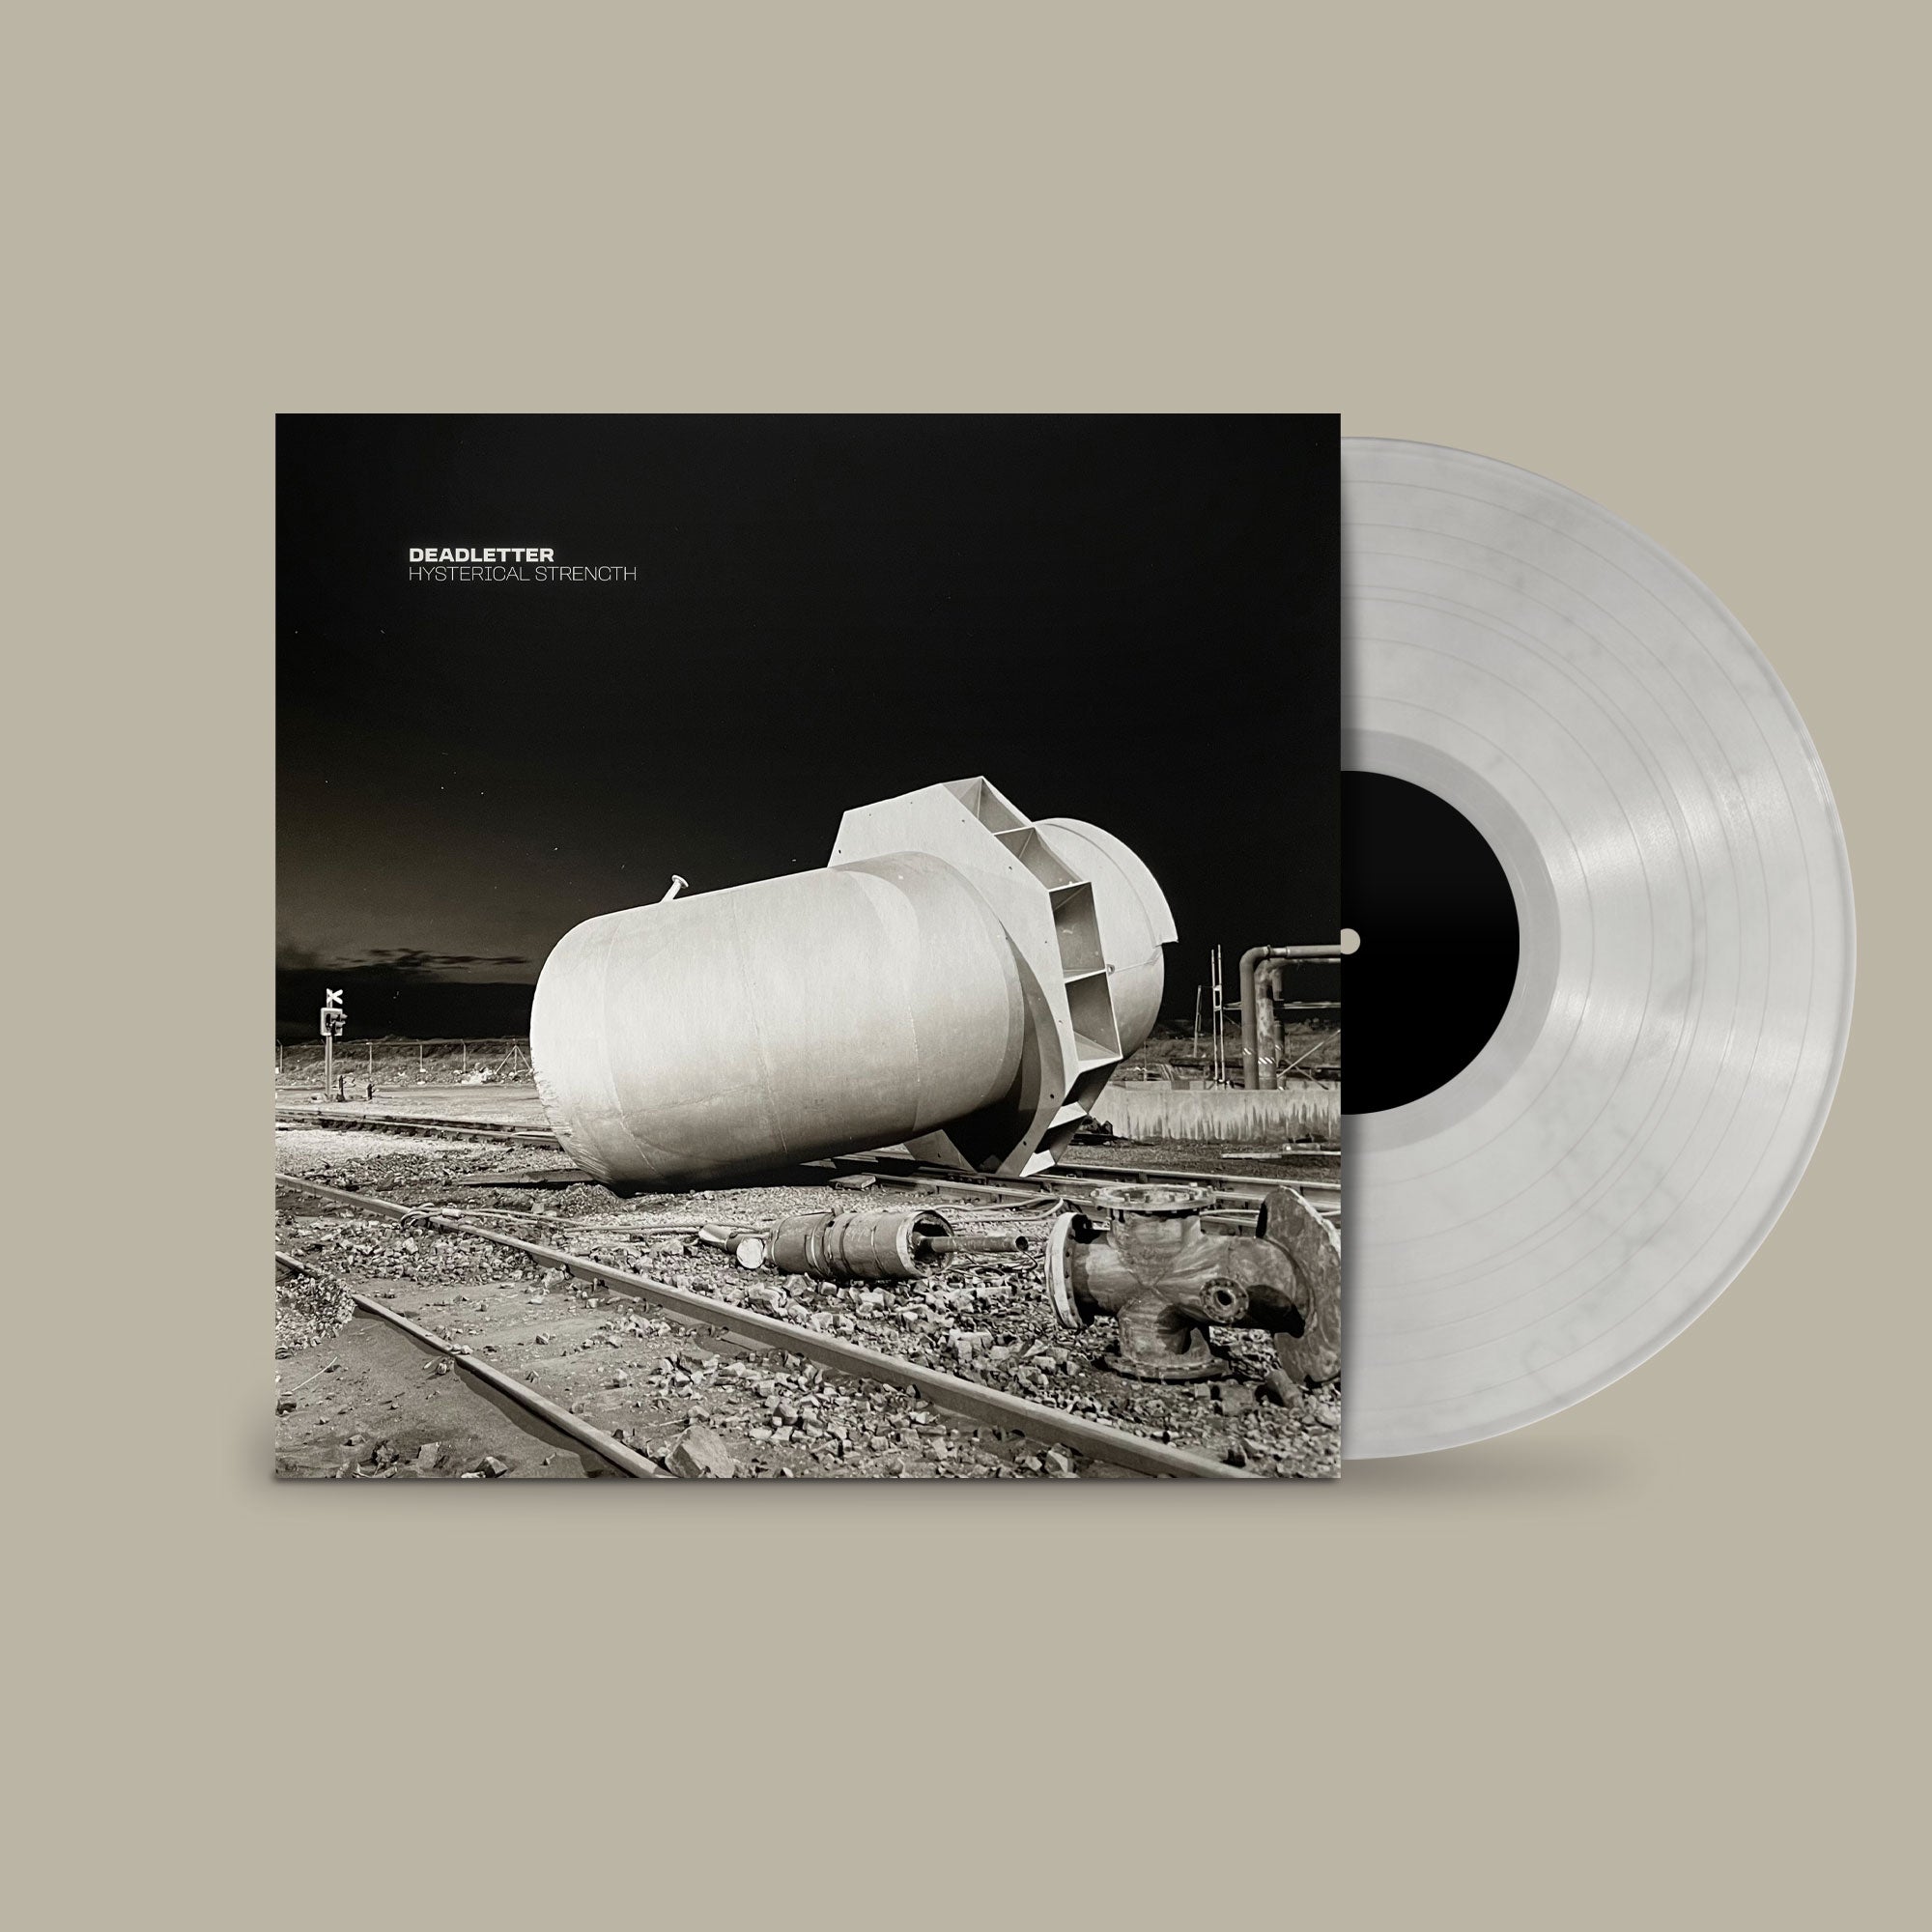 DEADLETTER - Hysterical Strength: Limited Pearl White Vinyl LP